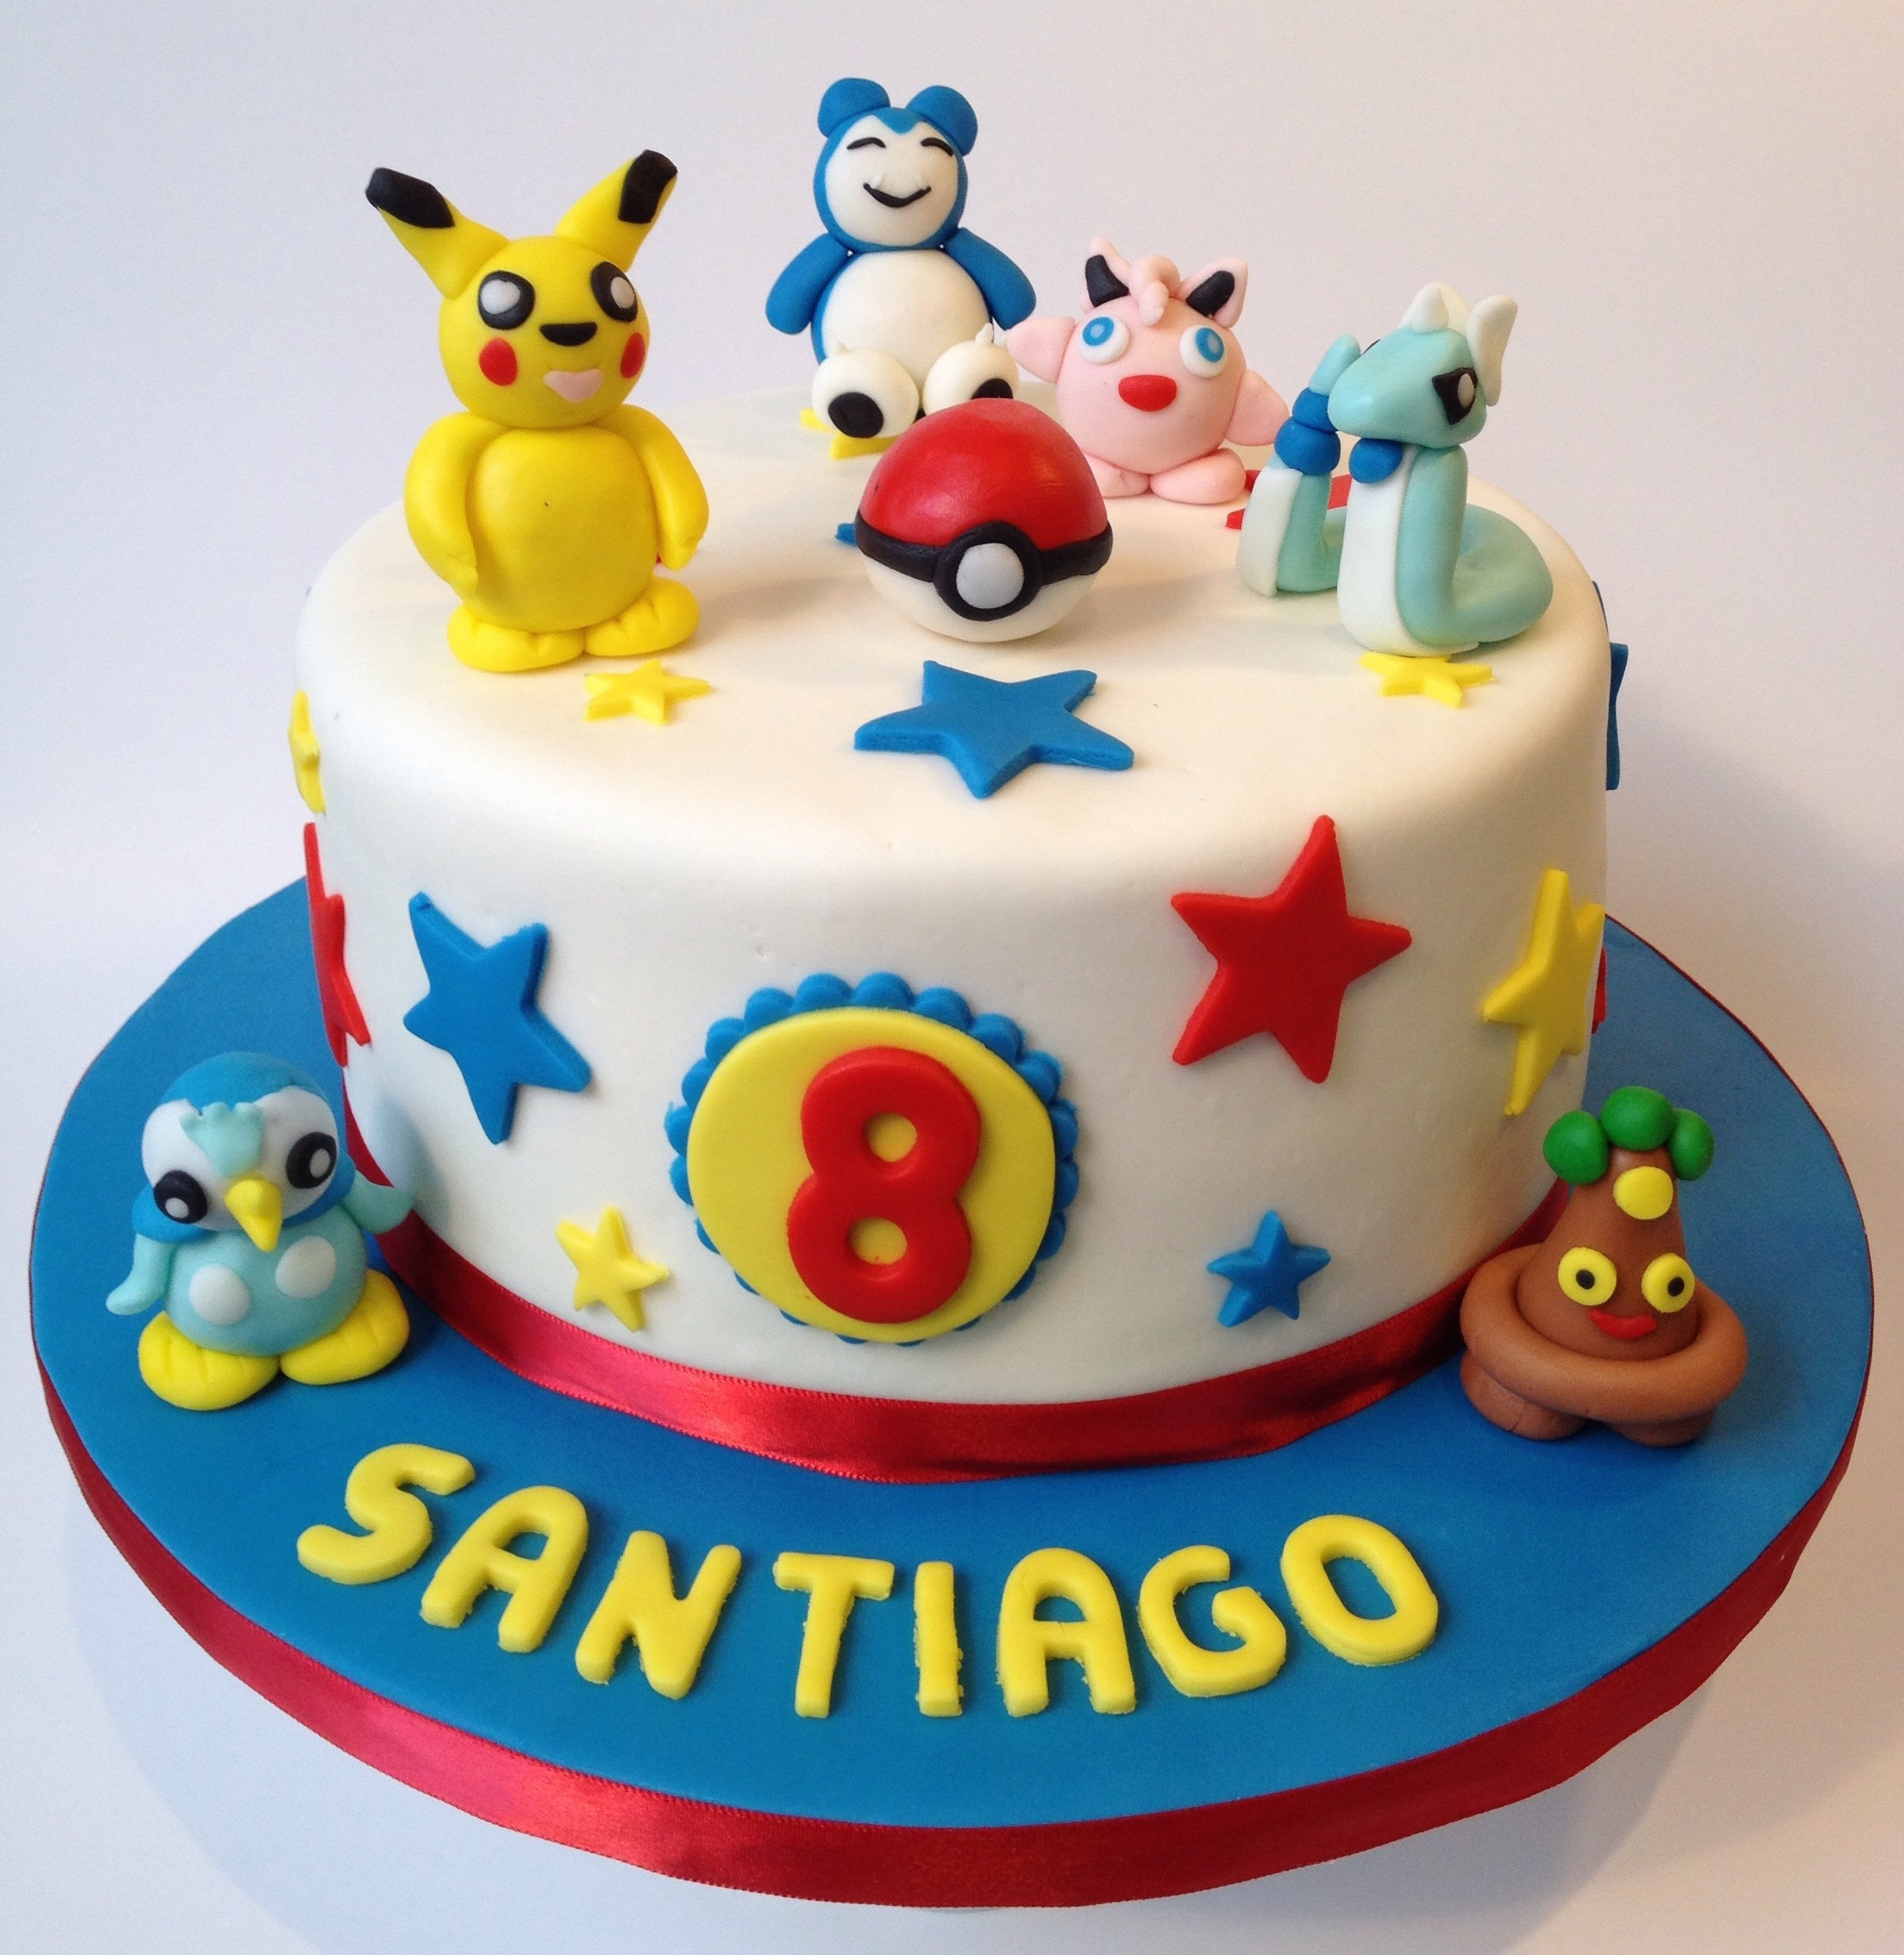 Best ideas about Pokemon Birthday Cake
. Save or Pin Pokemon Cake Now.